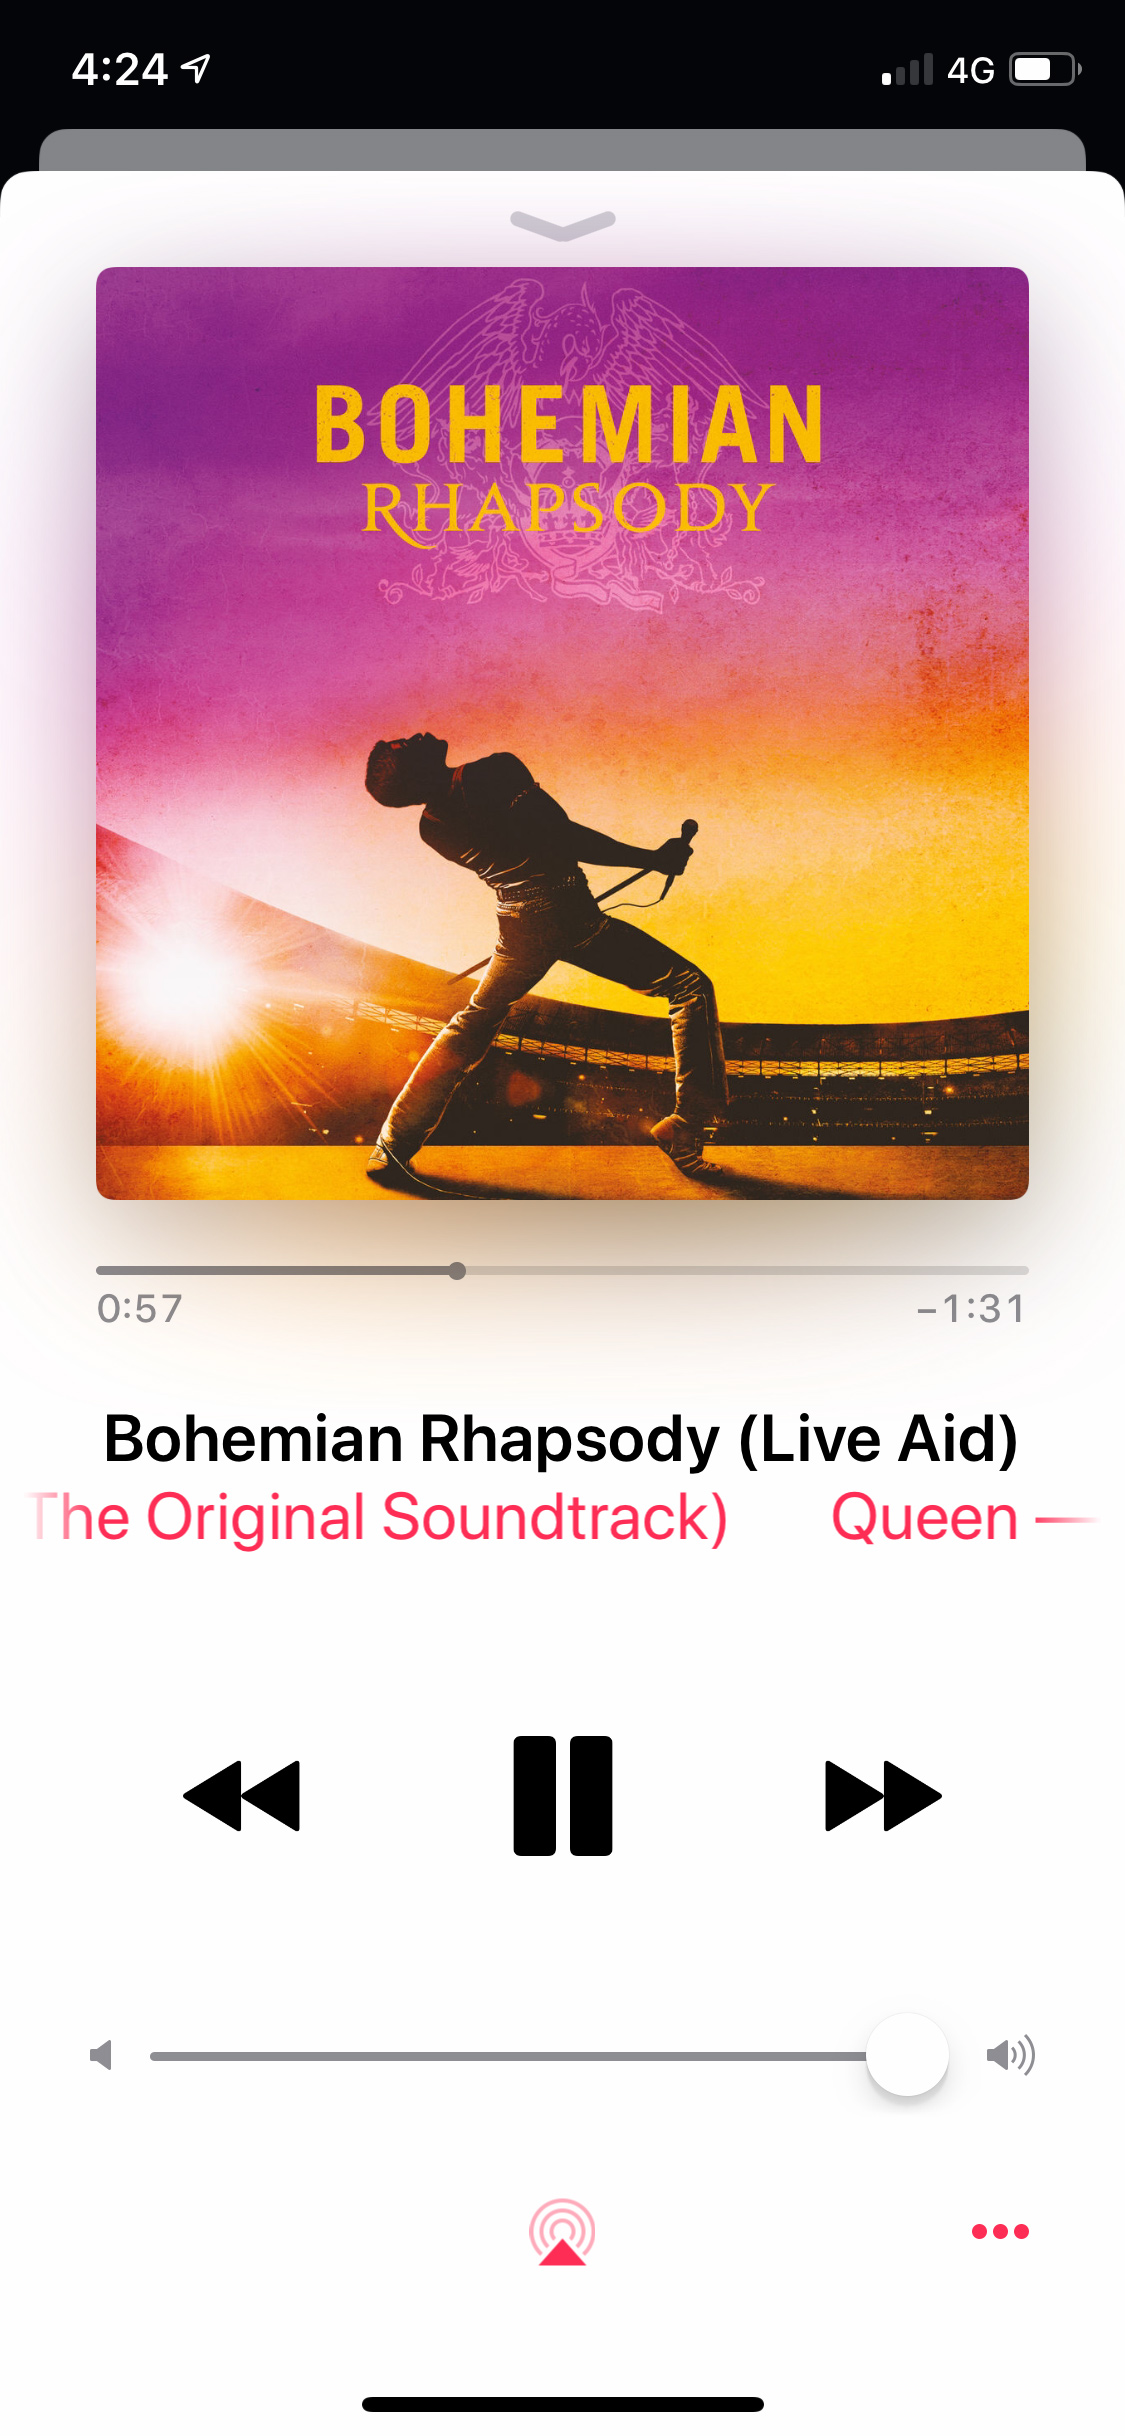 bohemian rhapsody soundtrack on repeat